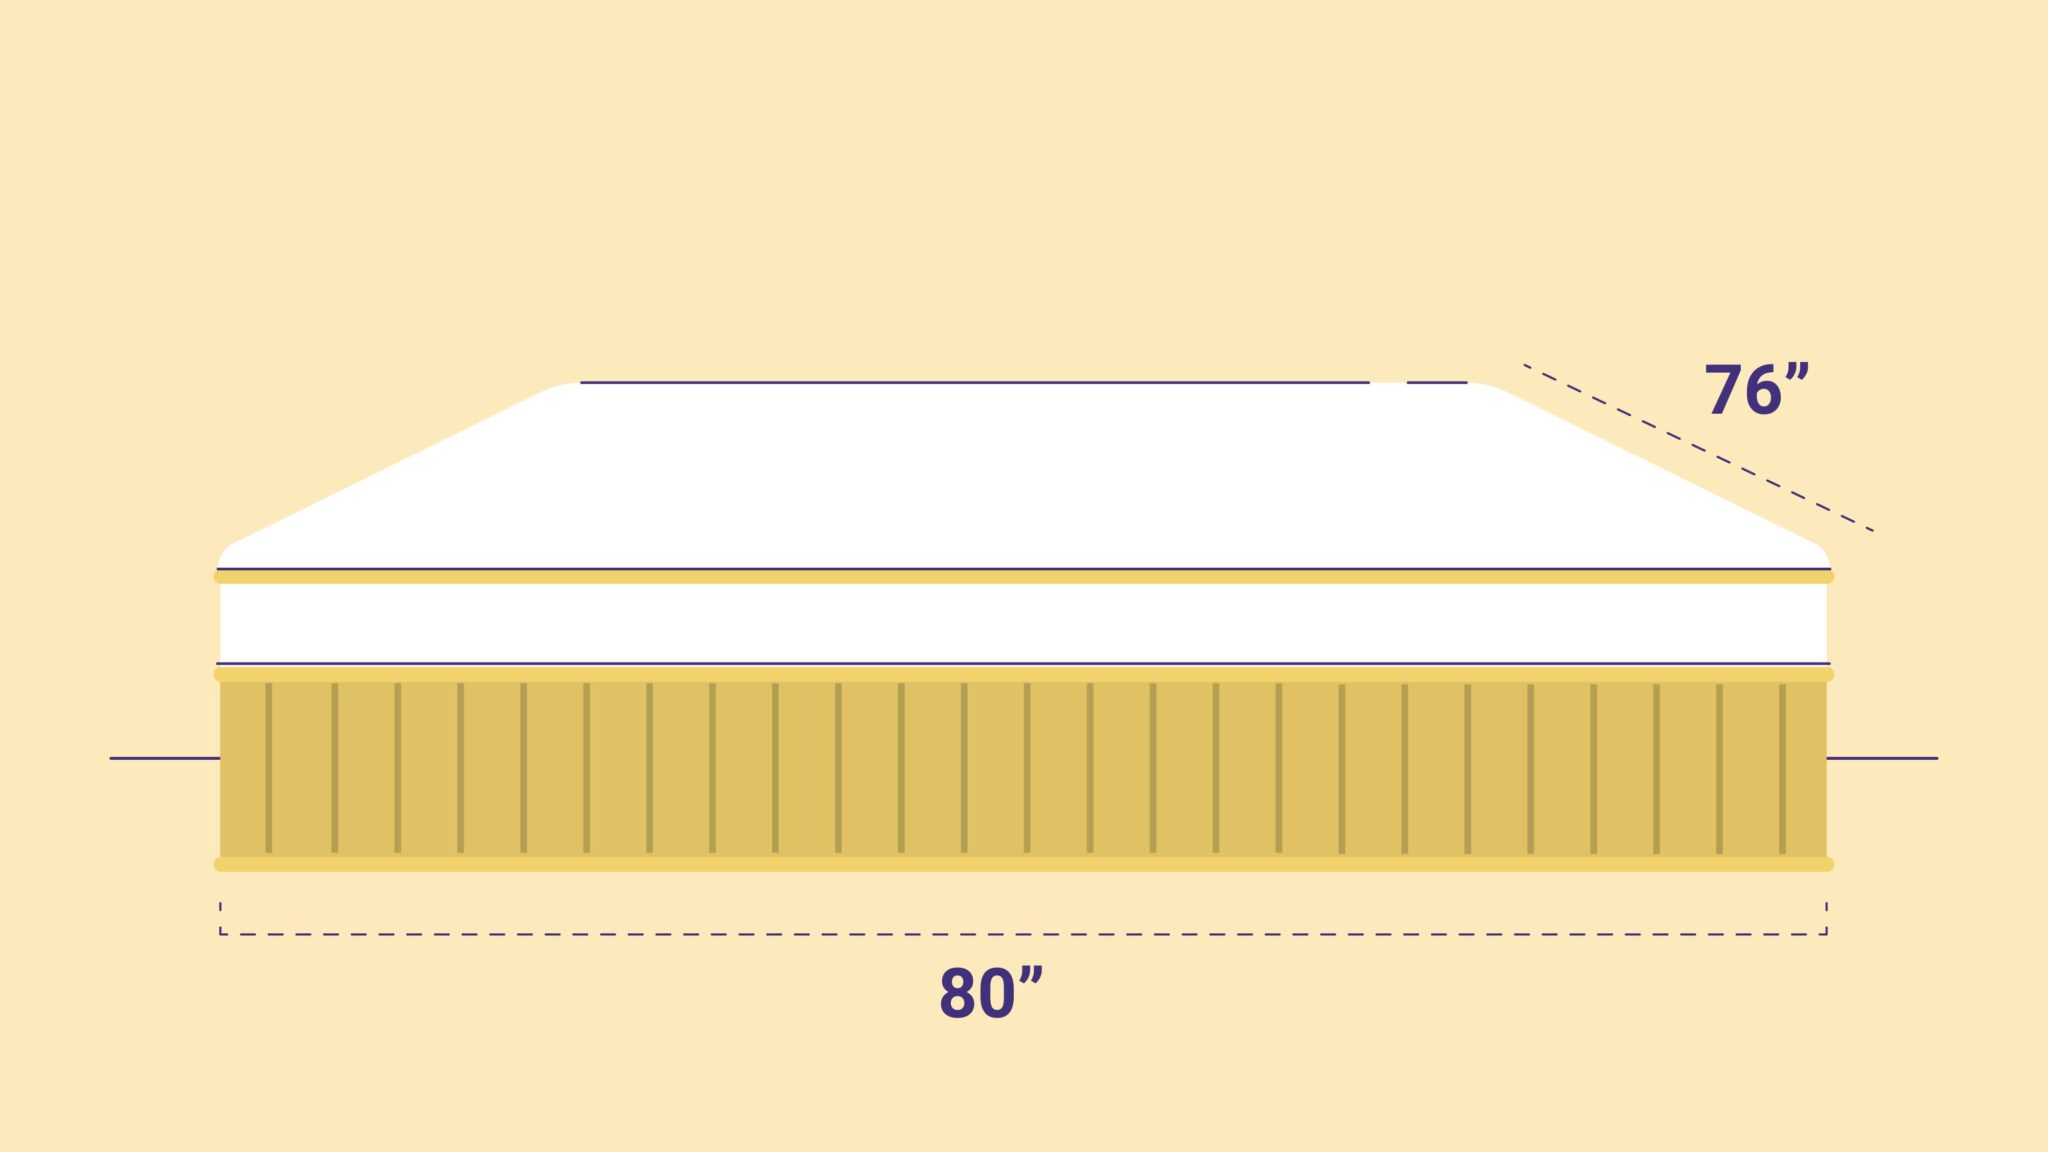 king size mattress memory gel under 300